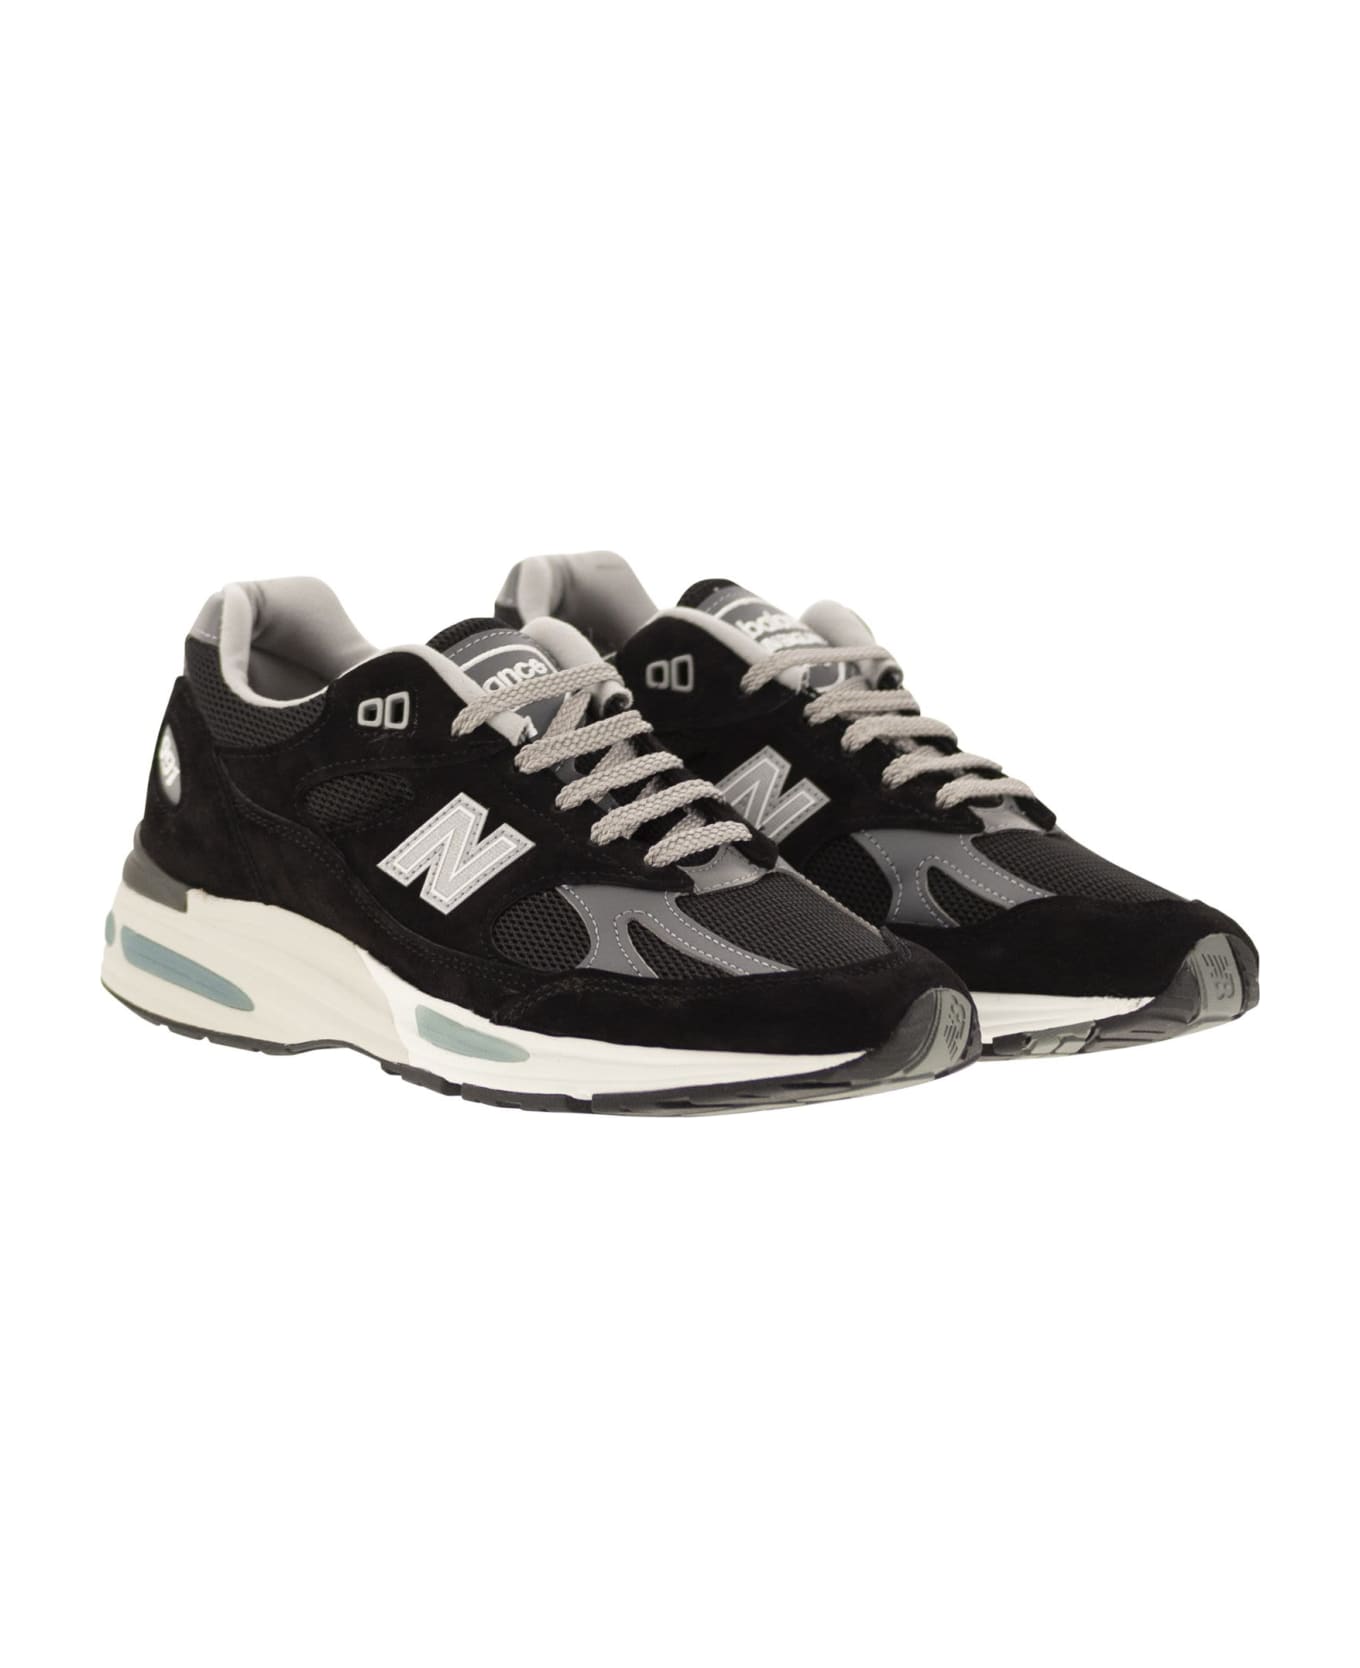 New Balance 991v1 - Sneakers - Black